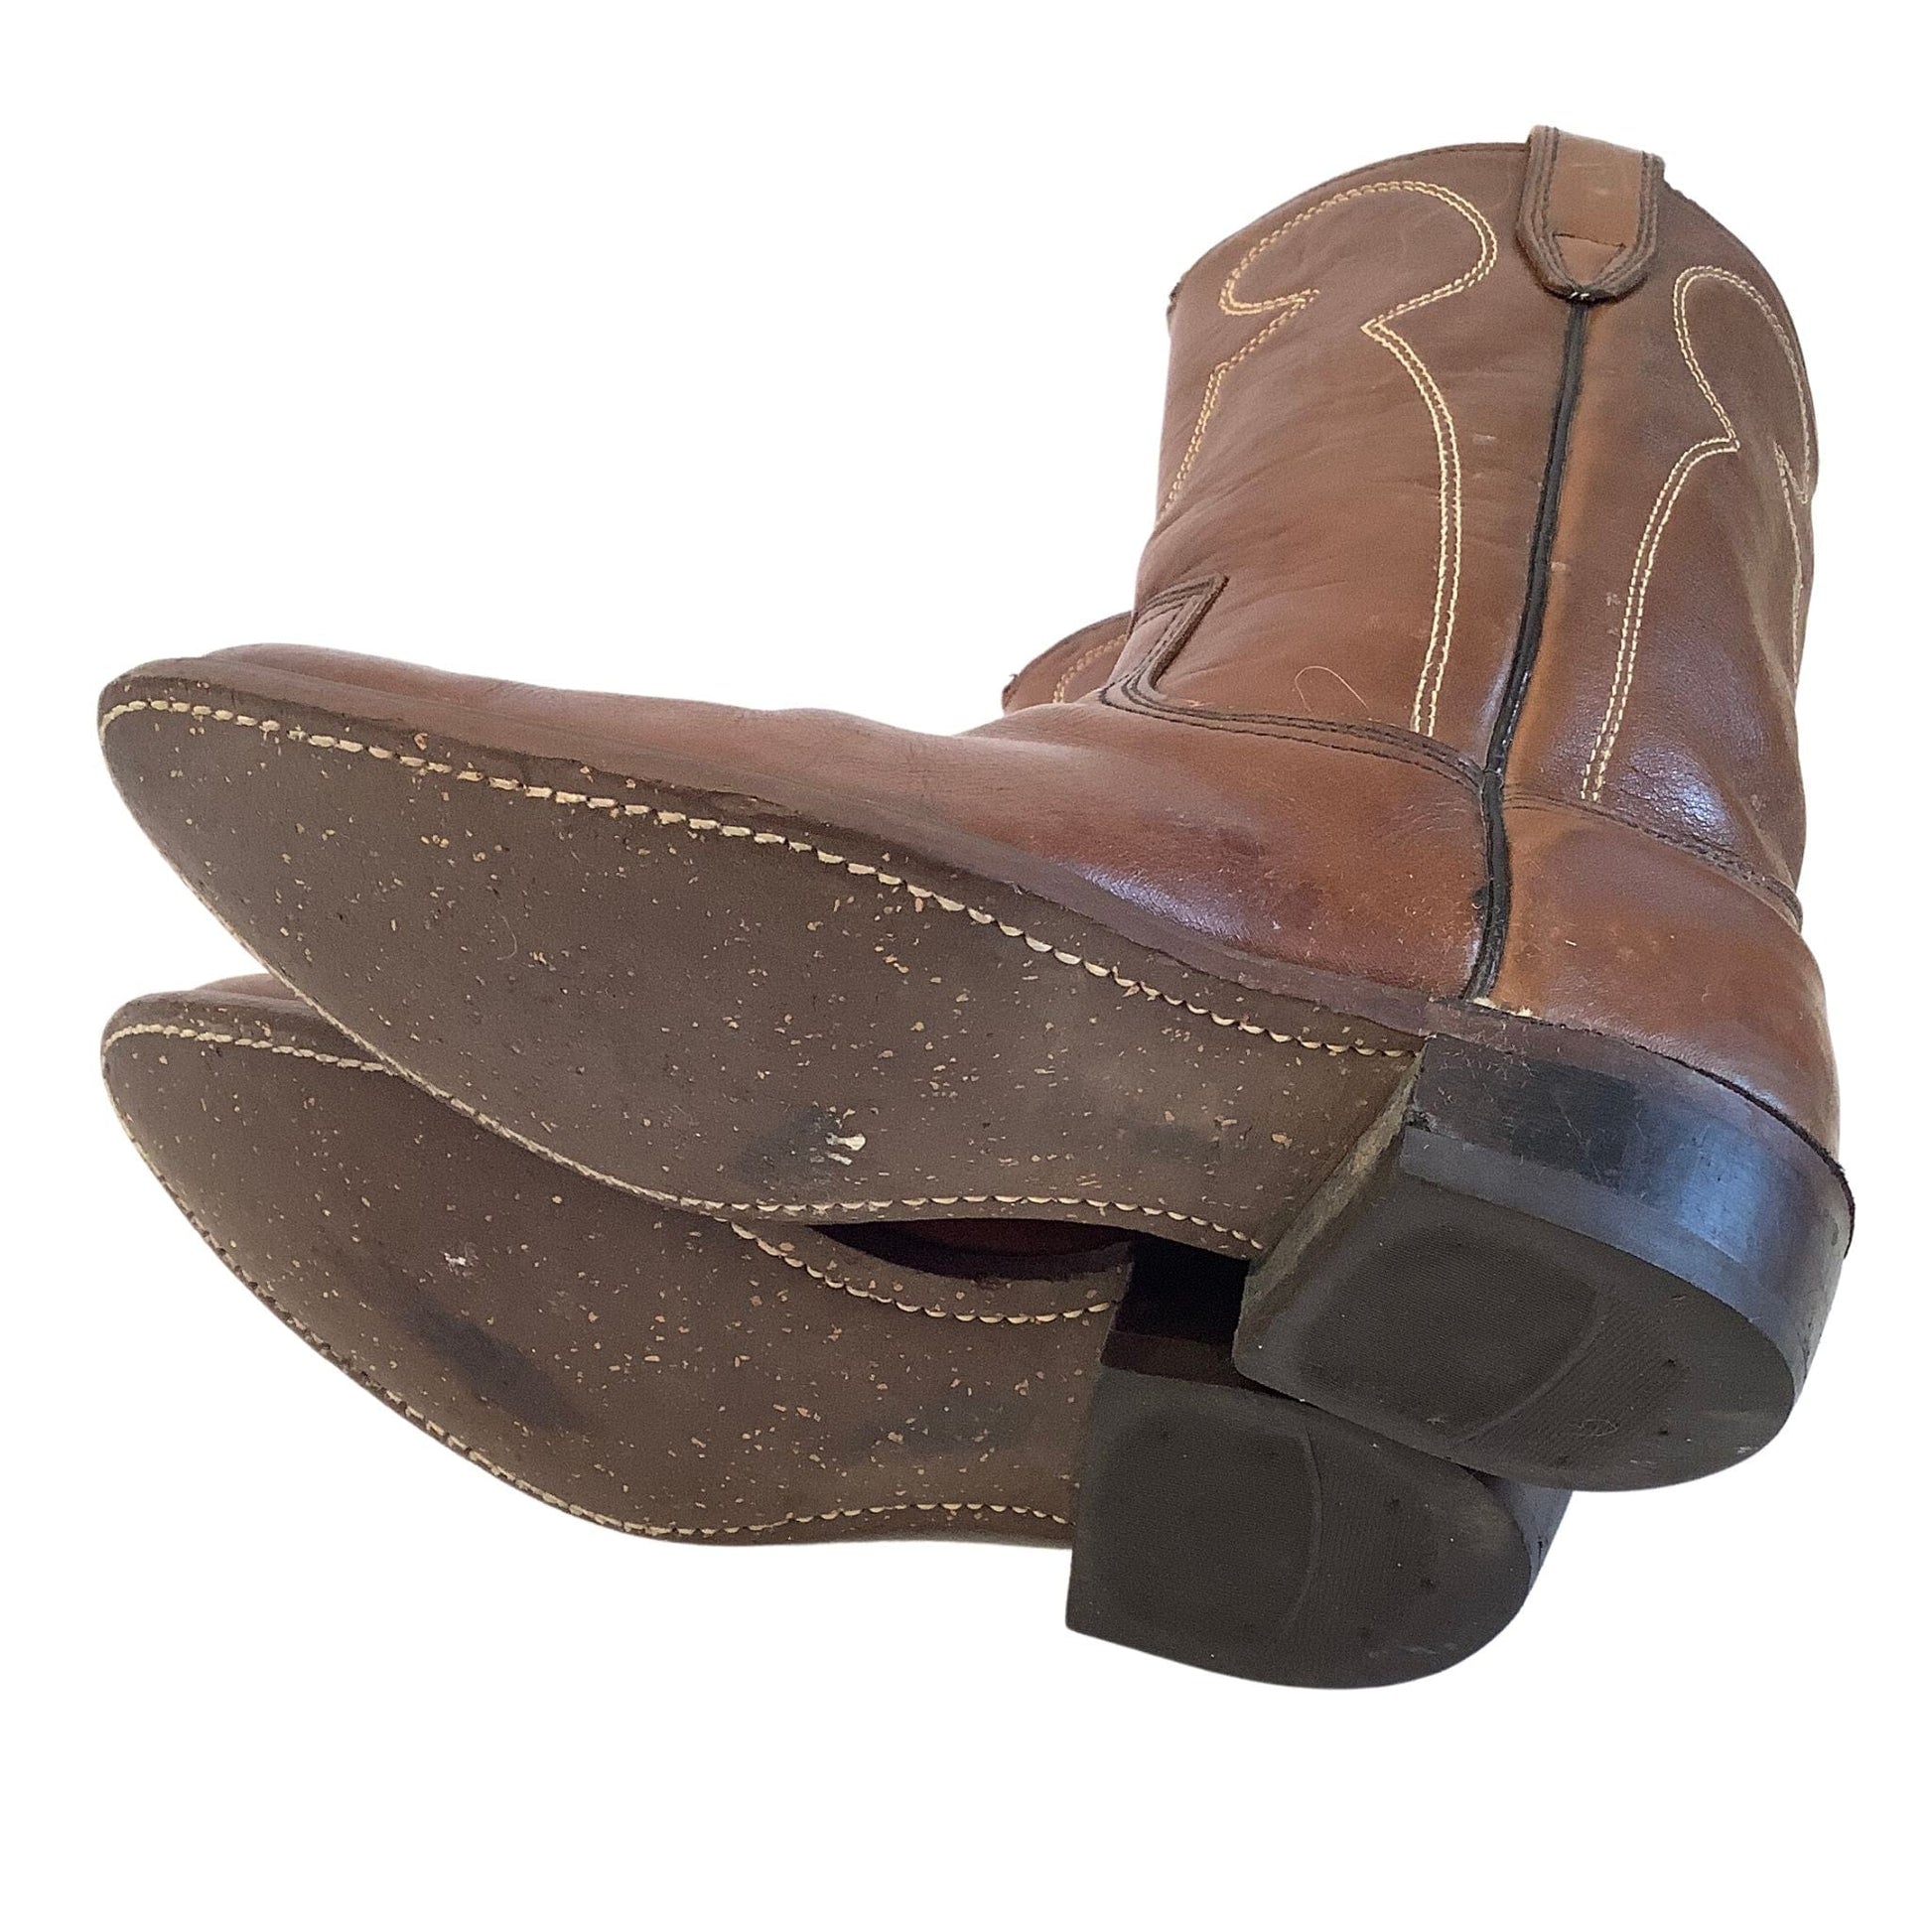 1950s Cowboy Boots 5.5 / Brown / Vintage 1950s